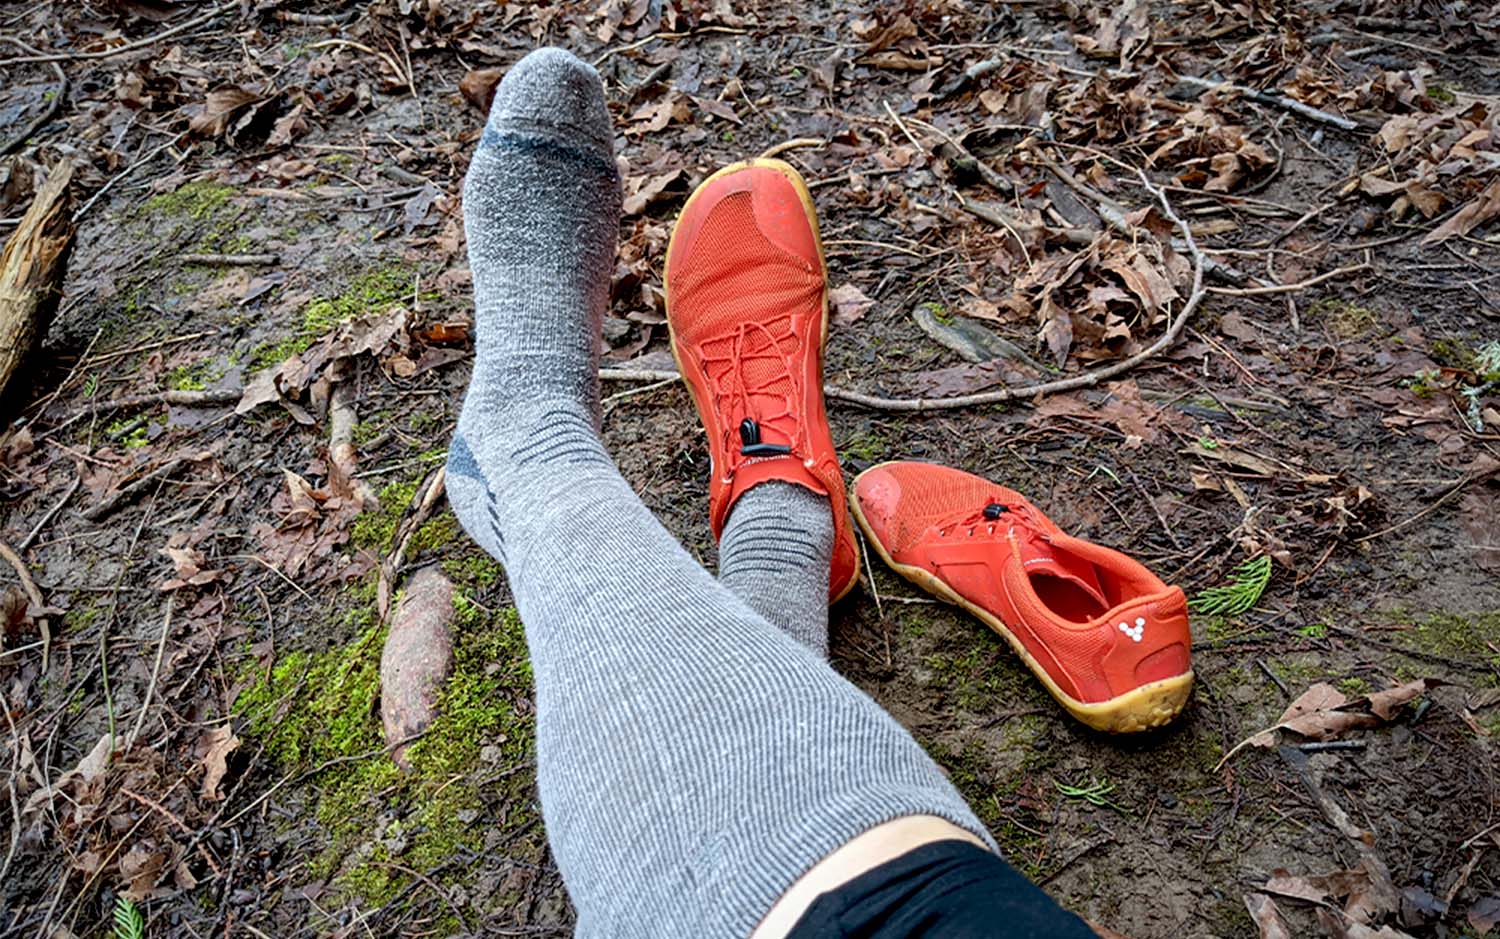 Crossed legs wearing grey hiking socks and orange hiking shoes